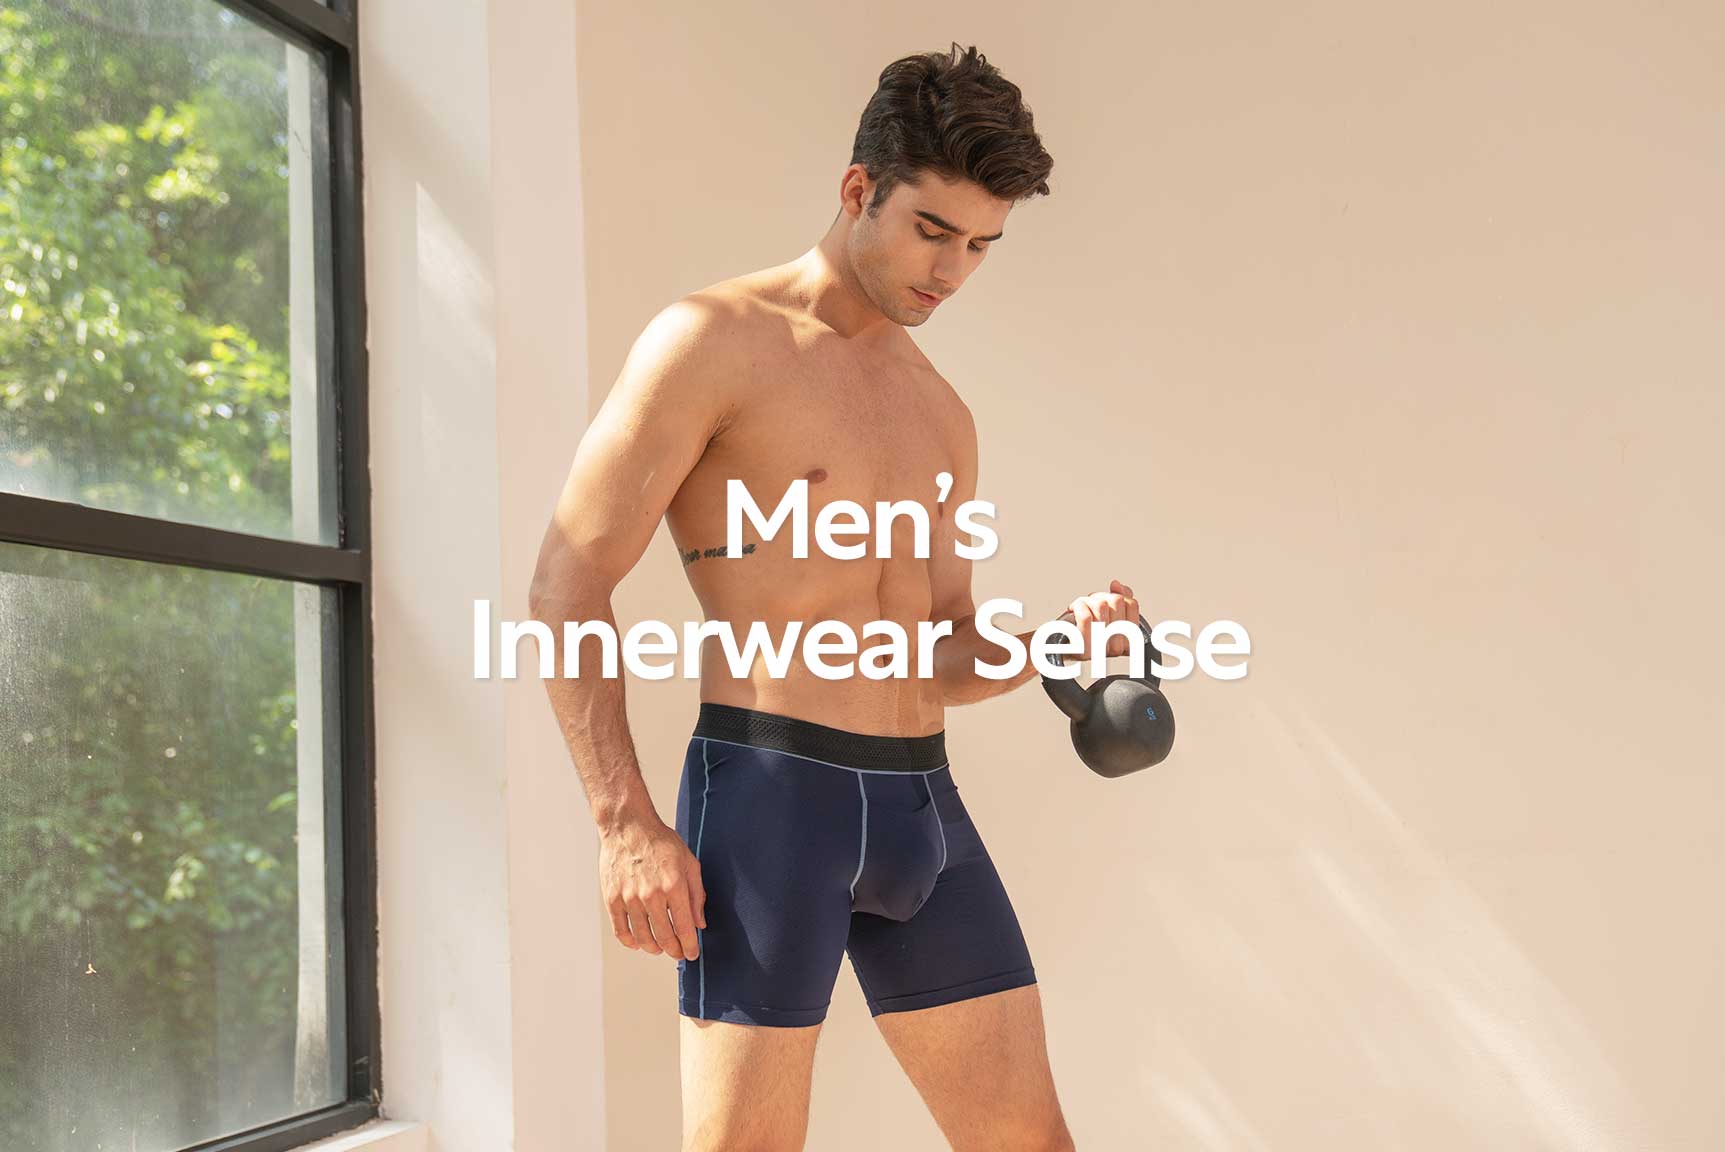 How to improve the men' s inner wear sense? – David Archy